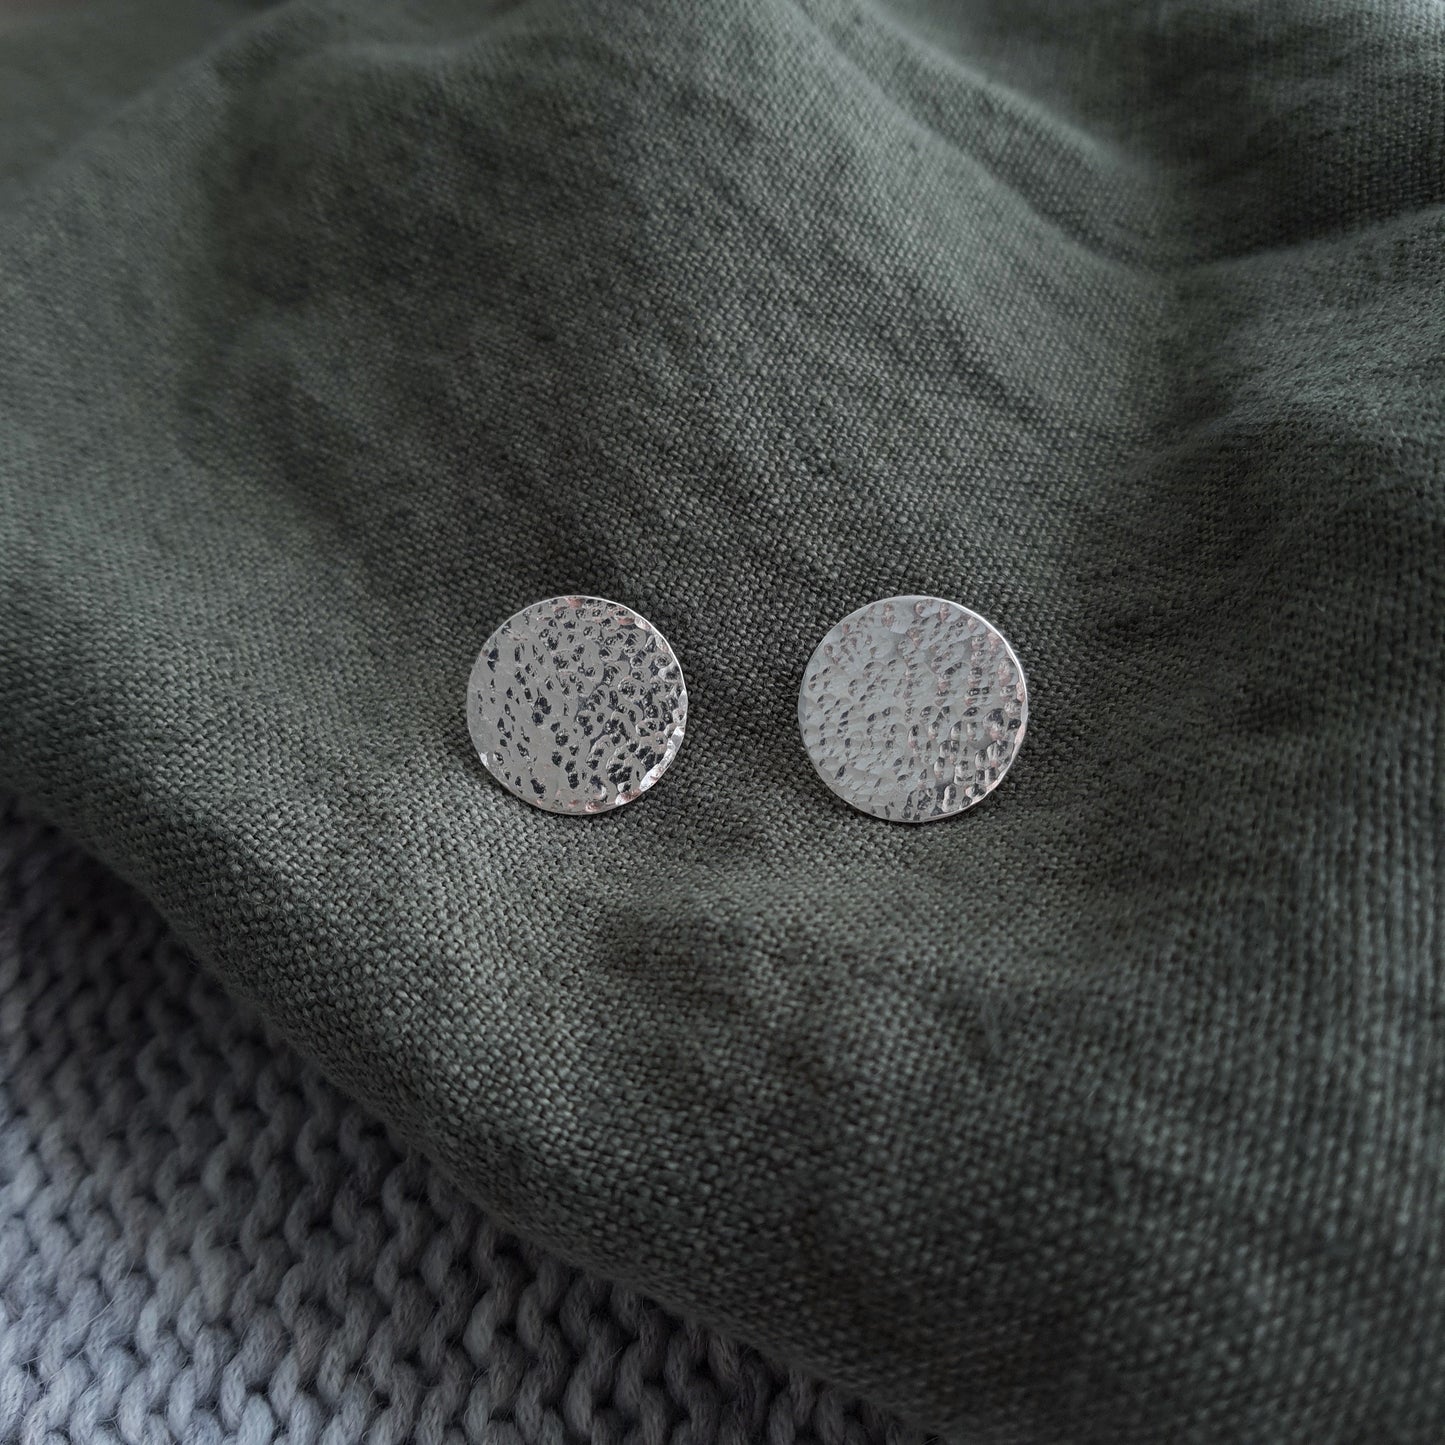 Honesty Silver Earrings Handmade by Anna Calvert Jewellery UK